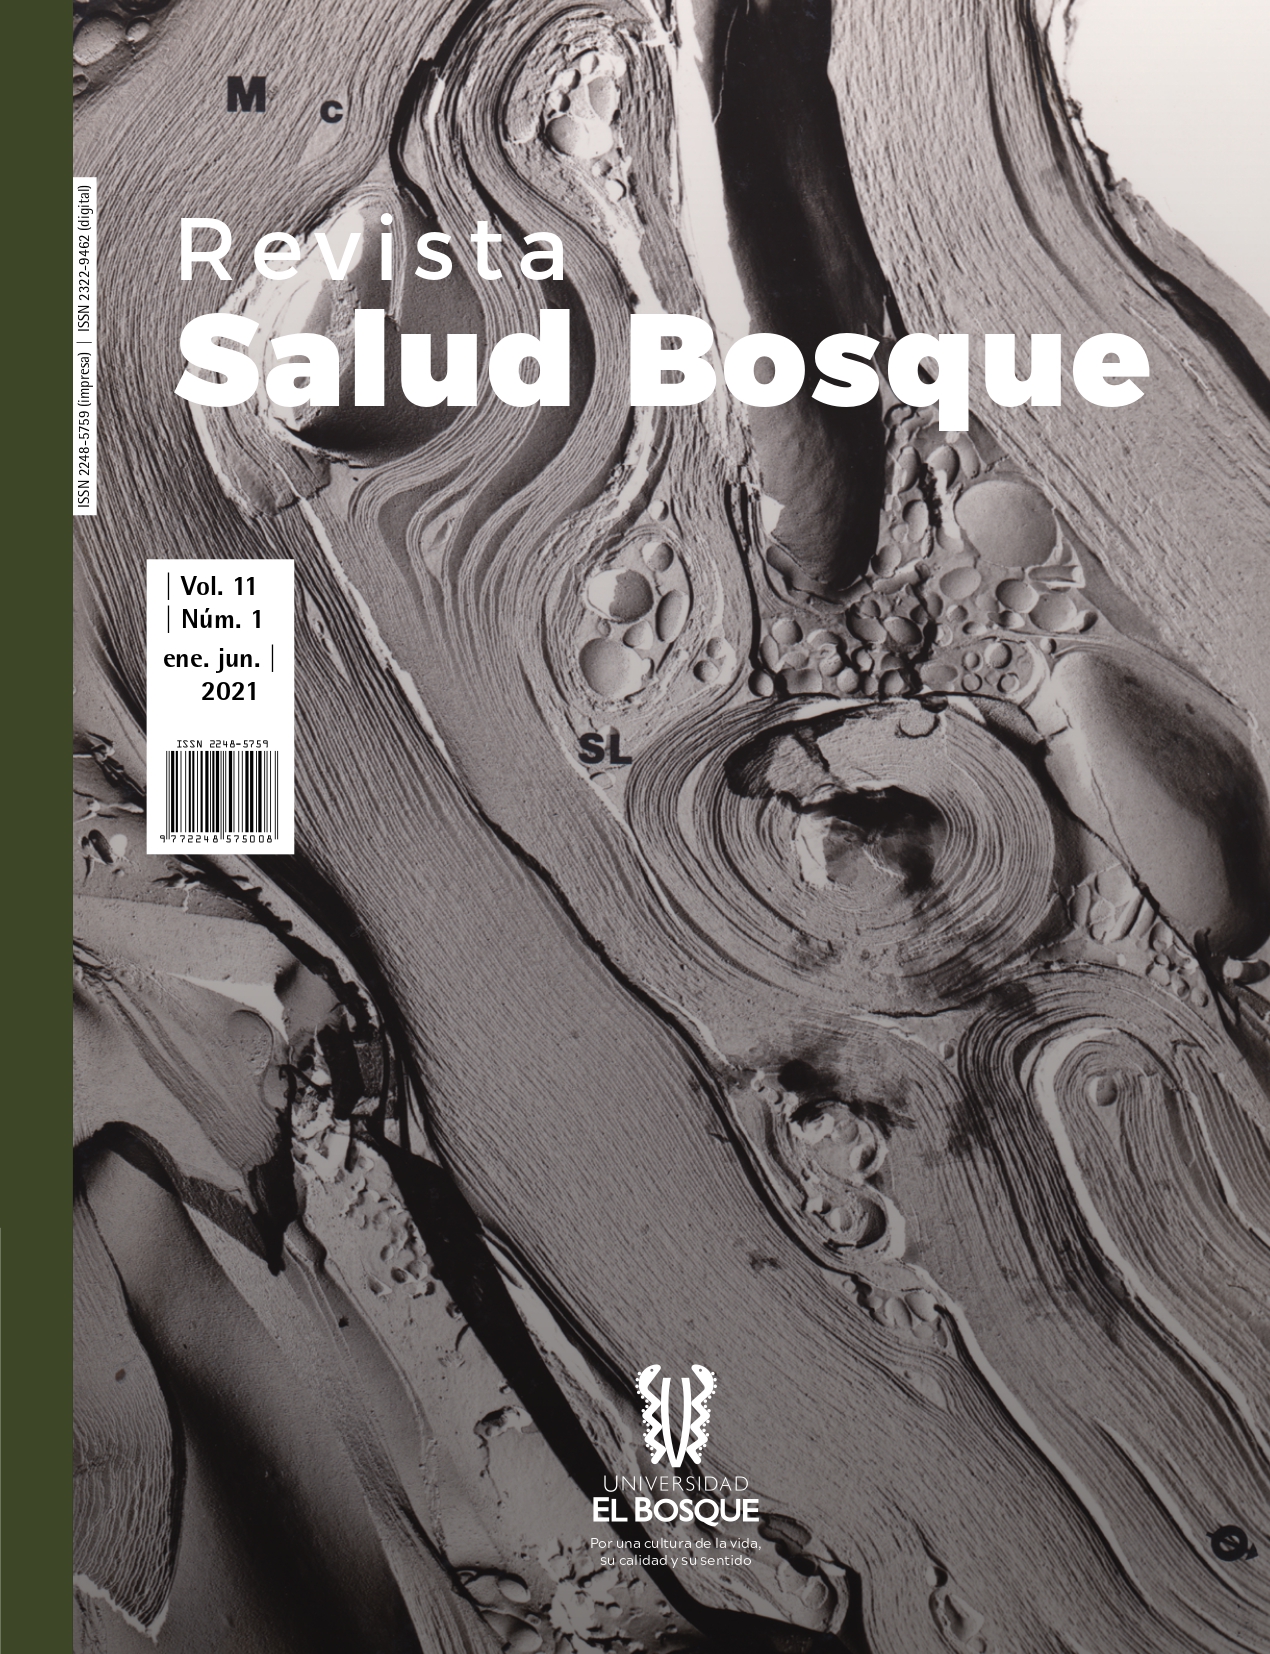 					View Vol. 11 No. 1 (2021): Revista Salud Bosque
				